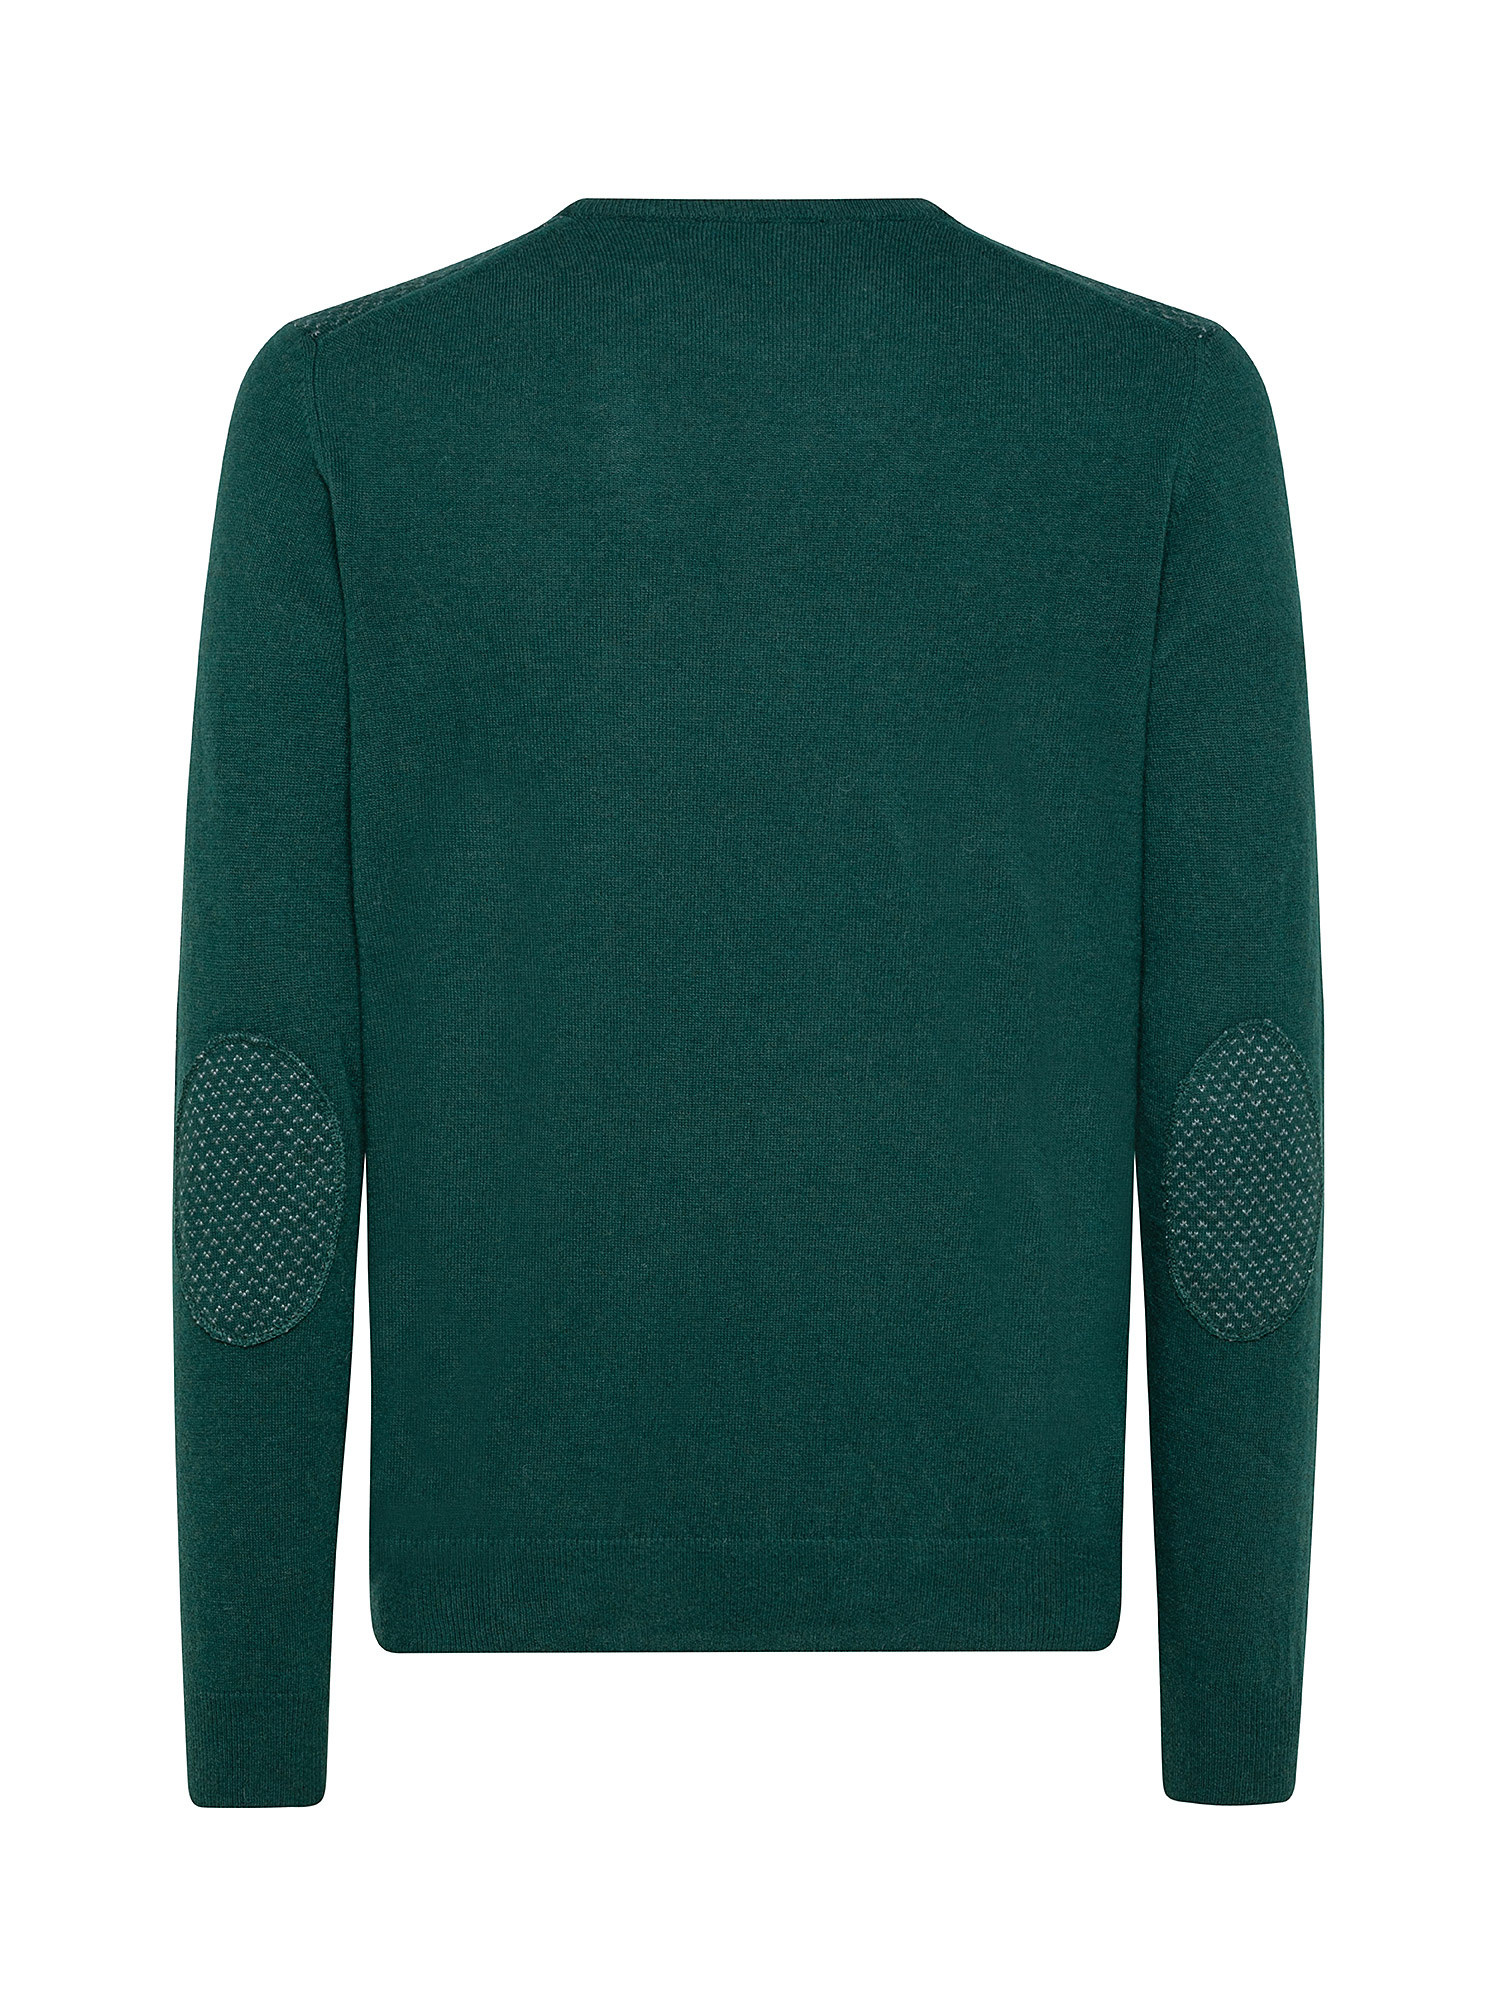 Basic crewneck pullover, Green, large image number 1